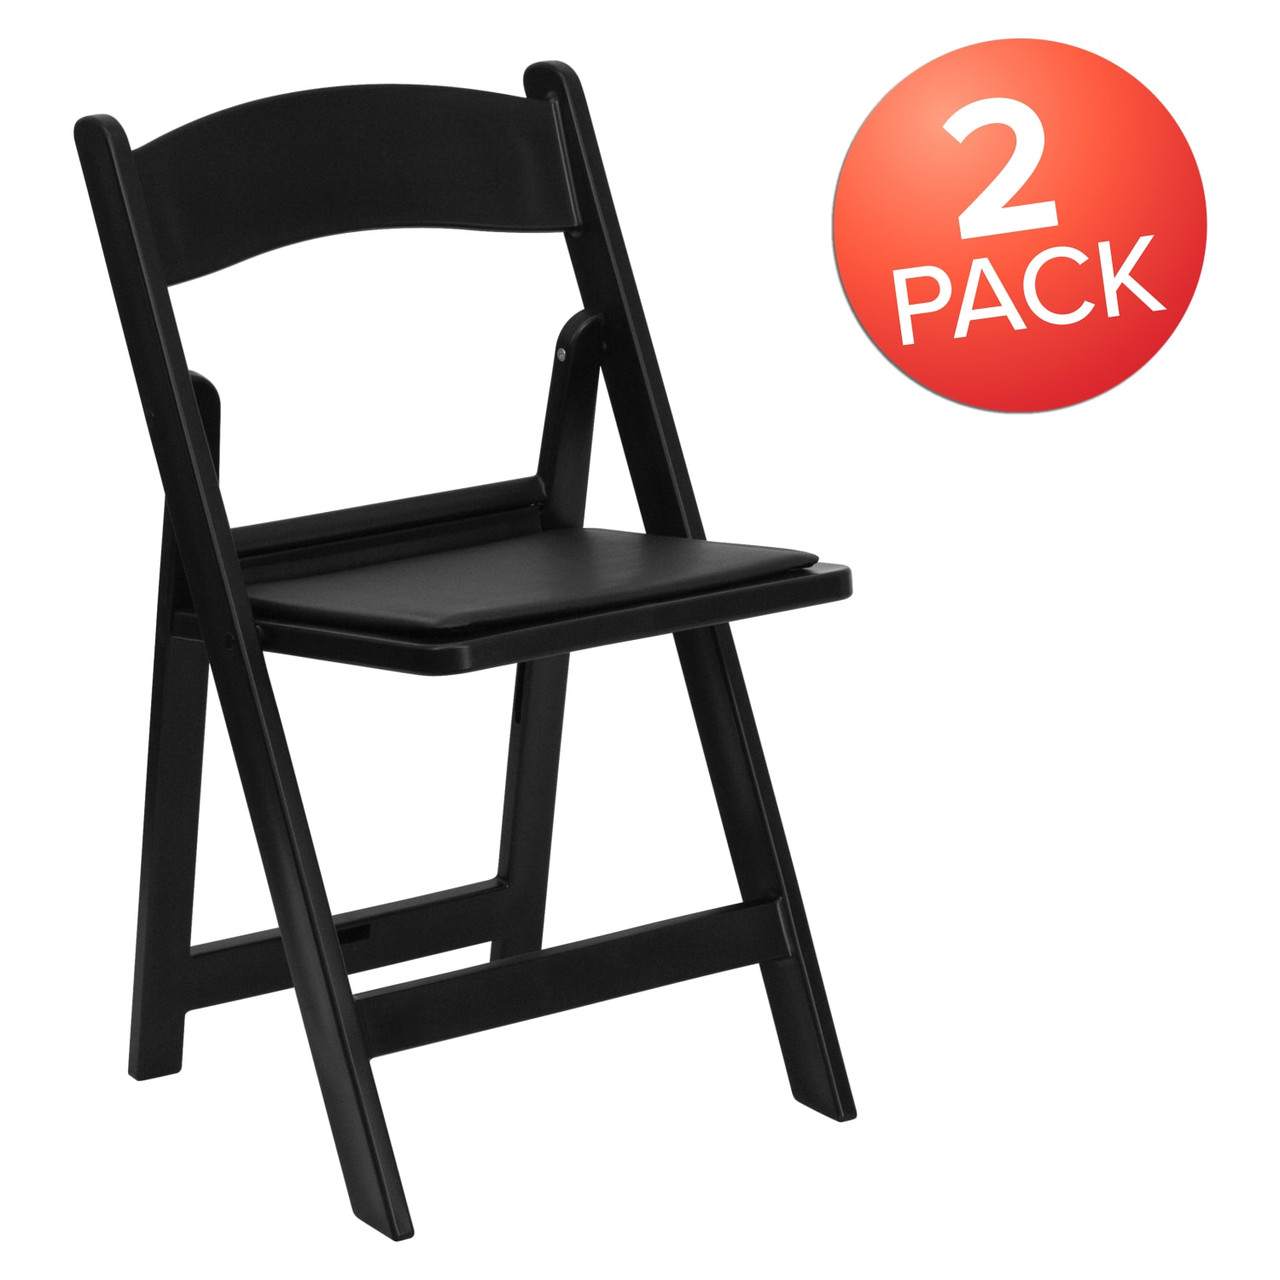 Hercules Folding Chair - Black Resin - 2 Pack Comfortable Event Chair - Light Weight Folding Chair